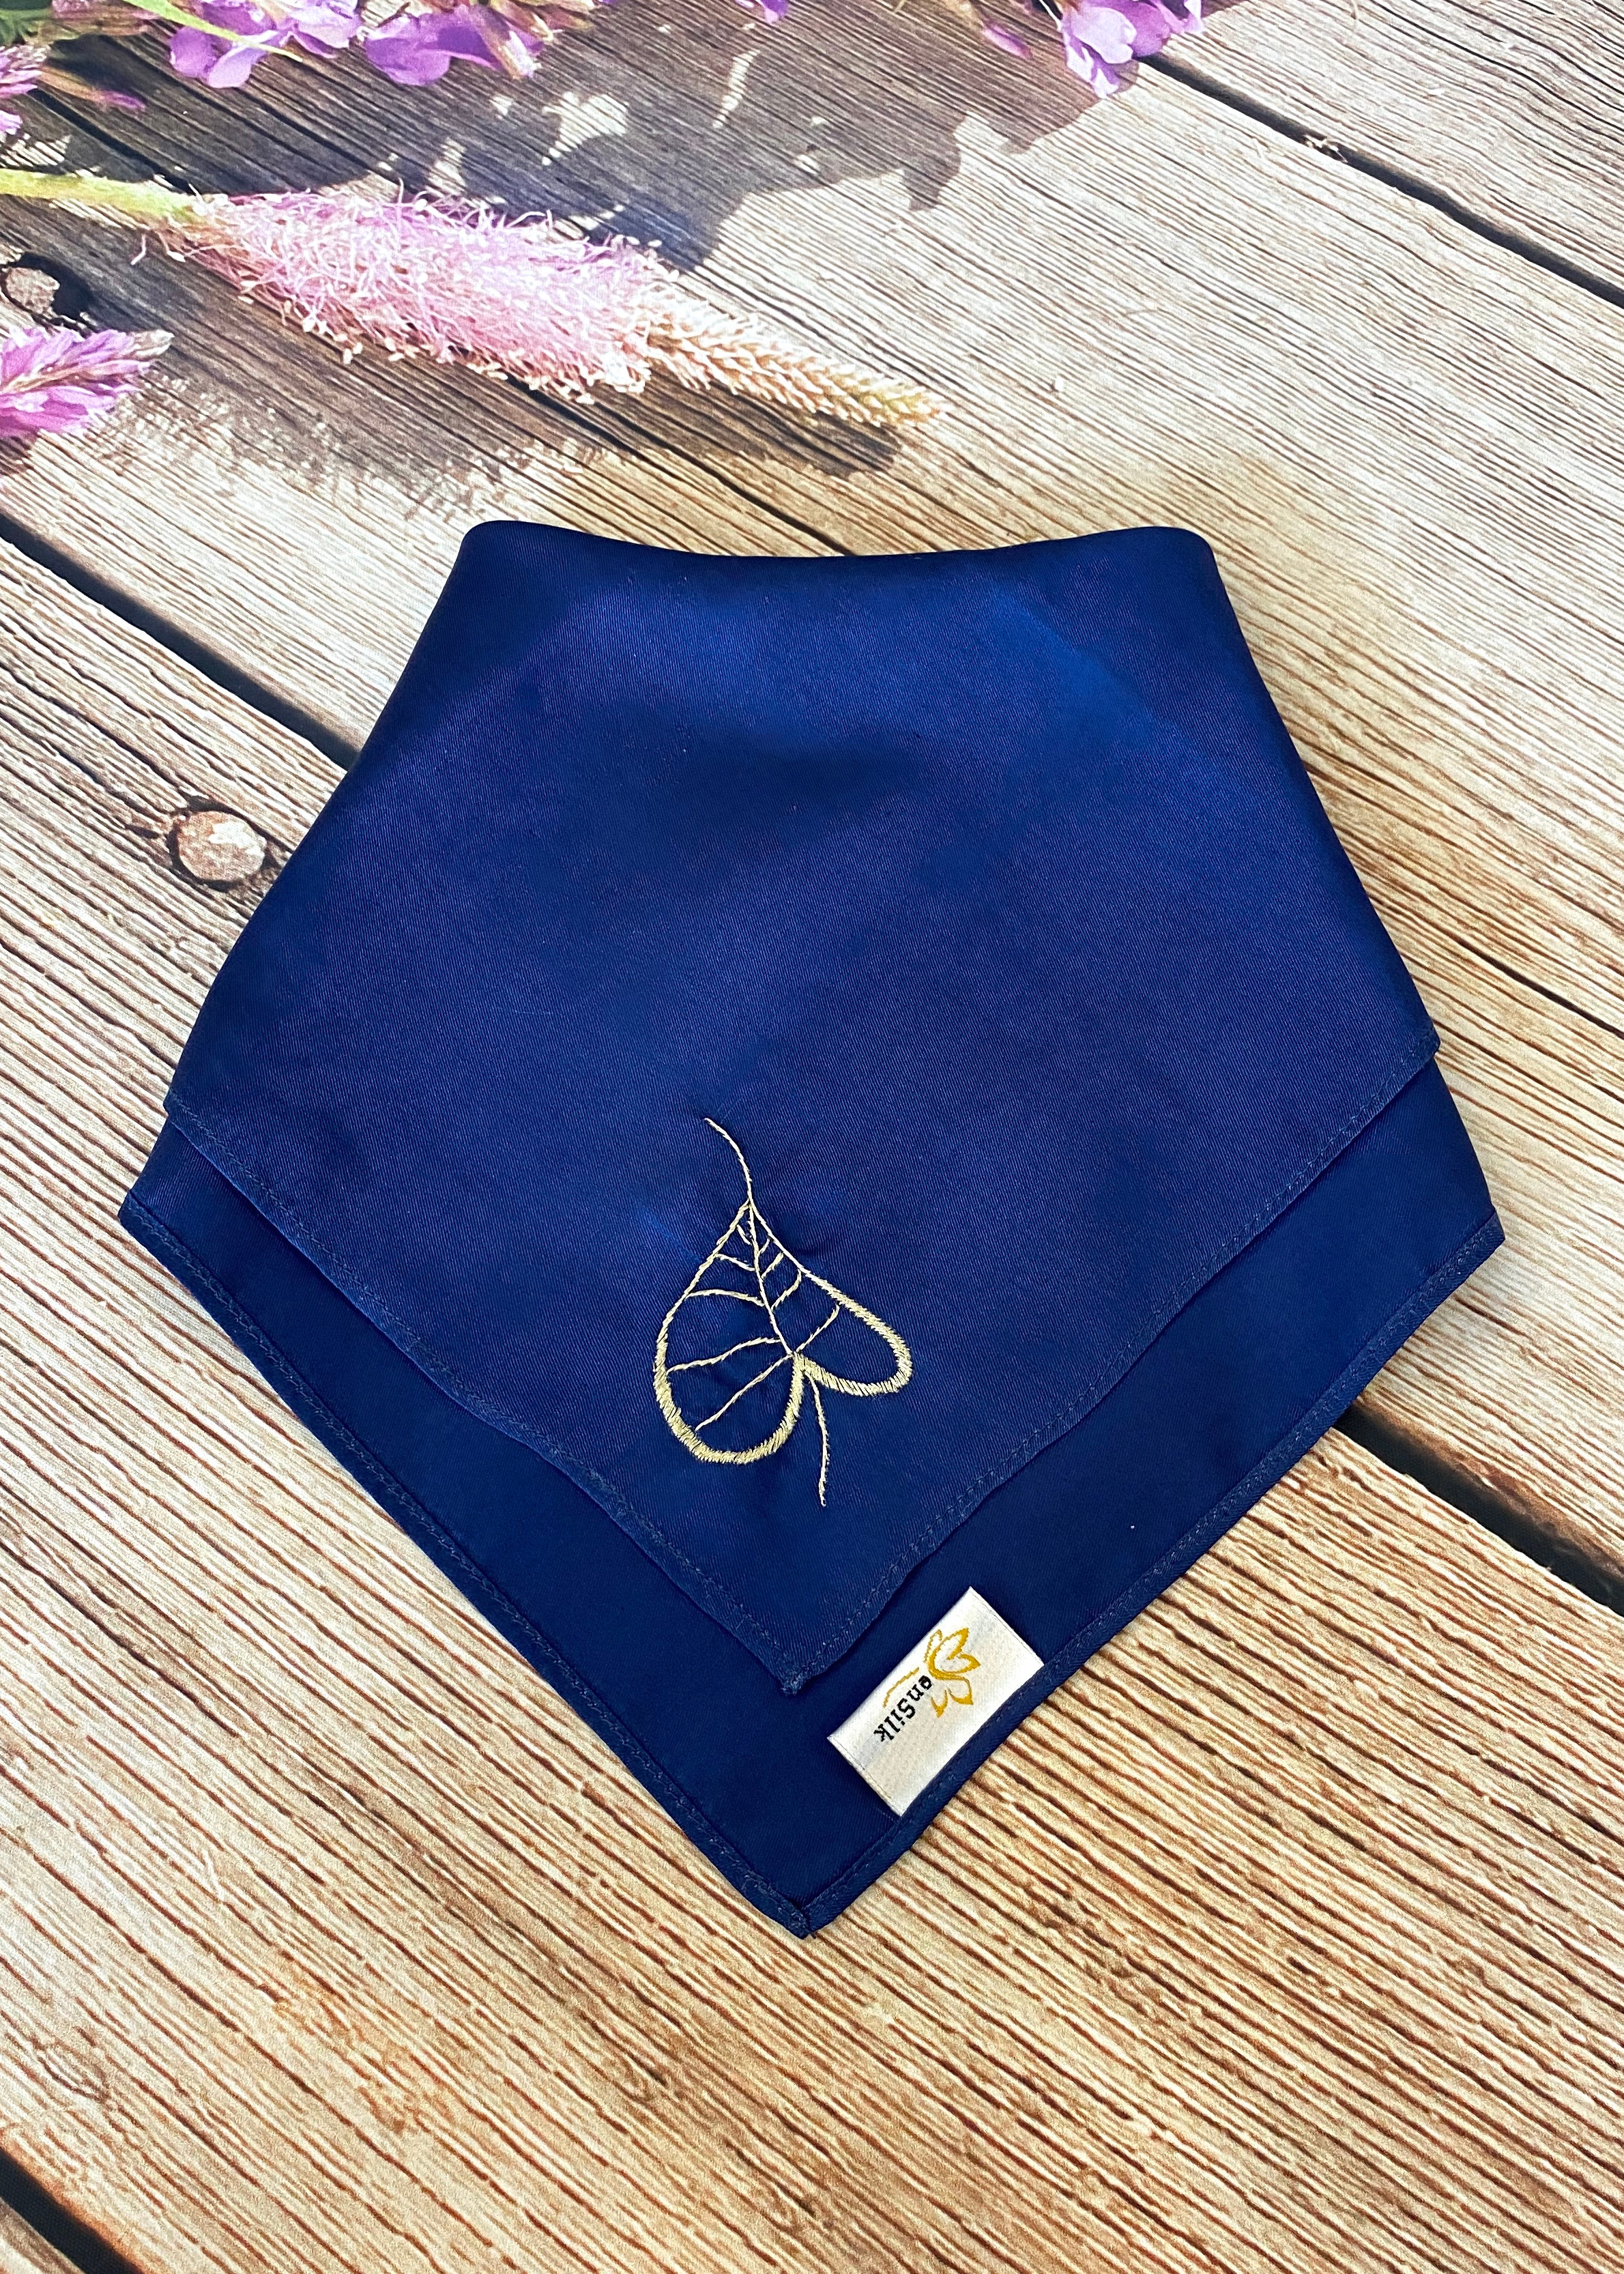 Khăn Tay Lụa Thêu Lá Bồ Đề SenSilk Embroidery Handkerchief